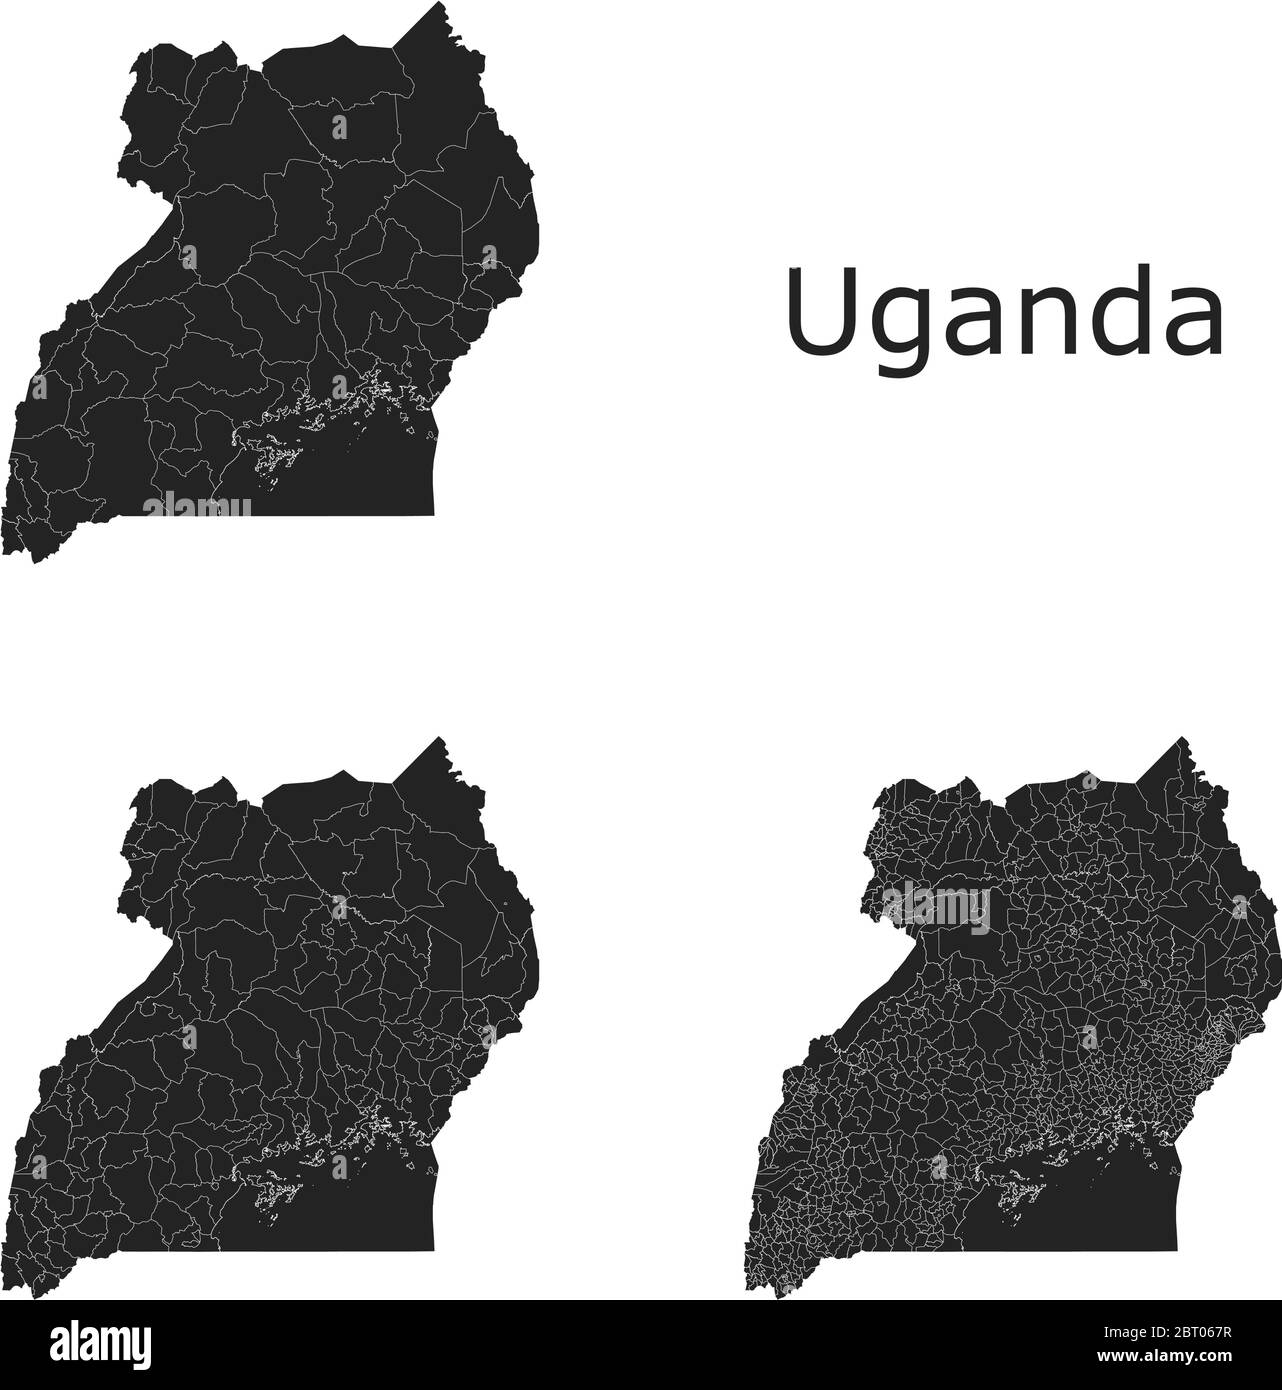 Uganda vector maps with administrative regions, municipalities, departments, borders Stock Vector